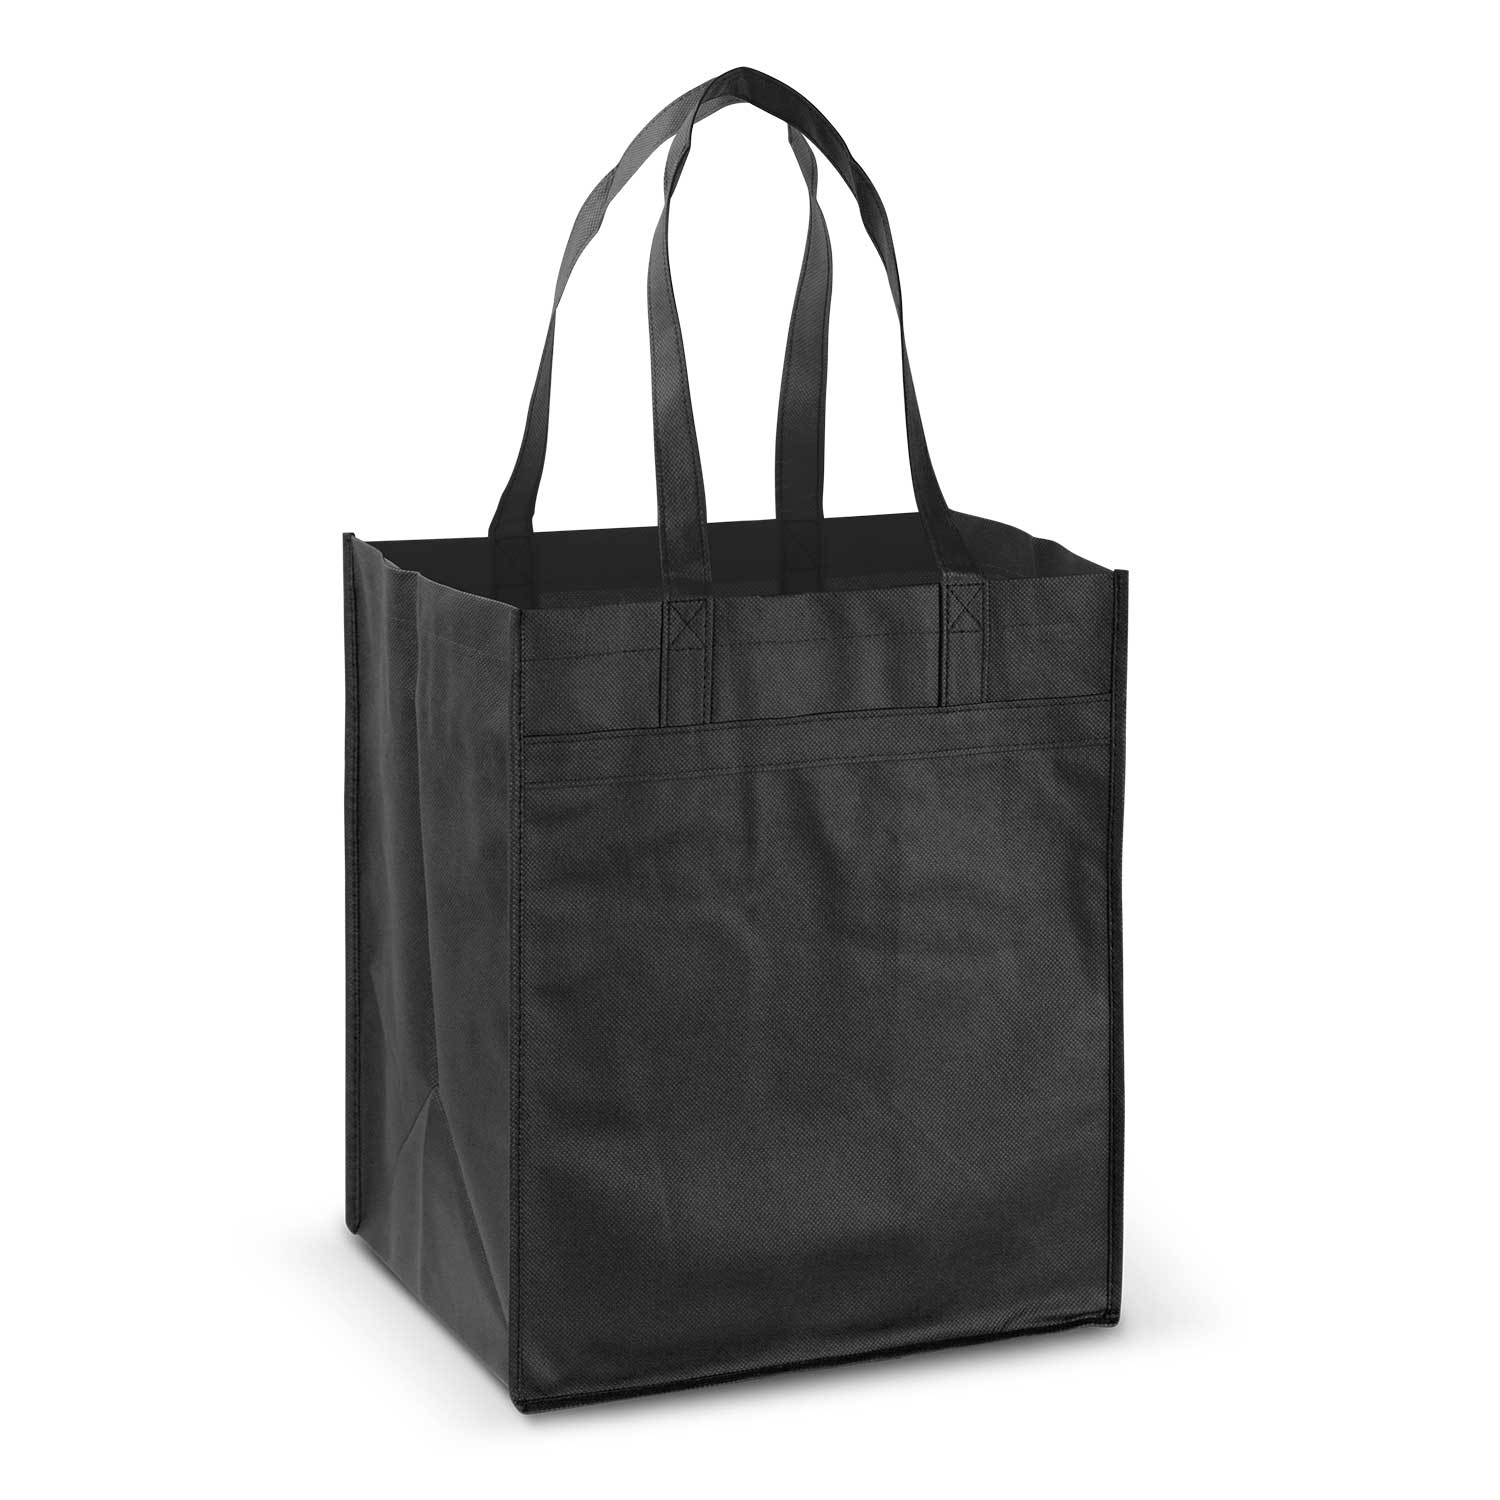 Mega Shopper Tote Bag - Image Group